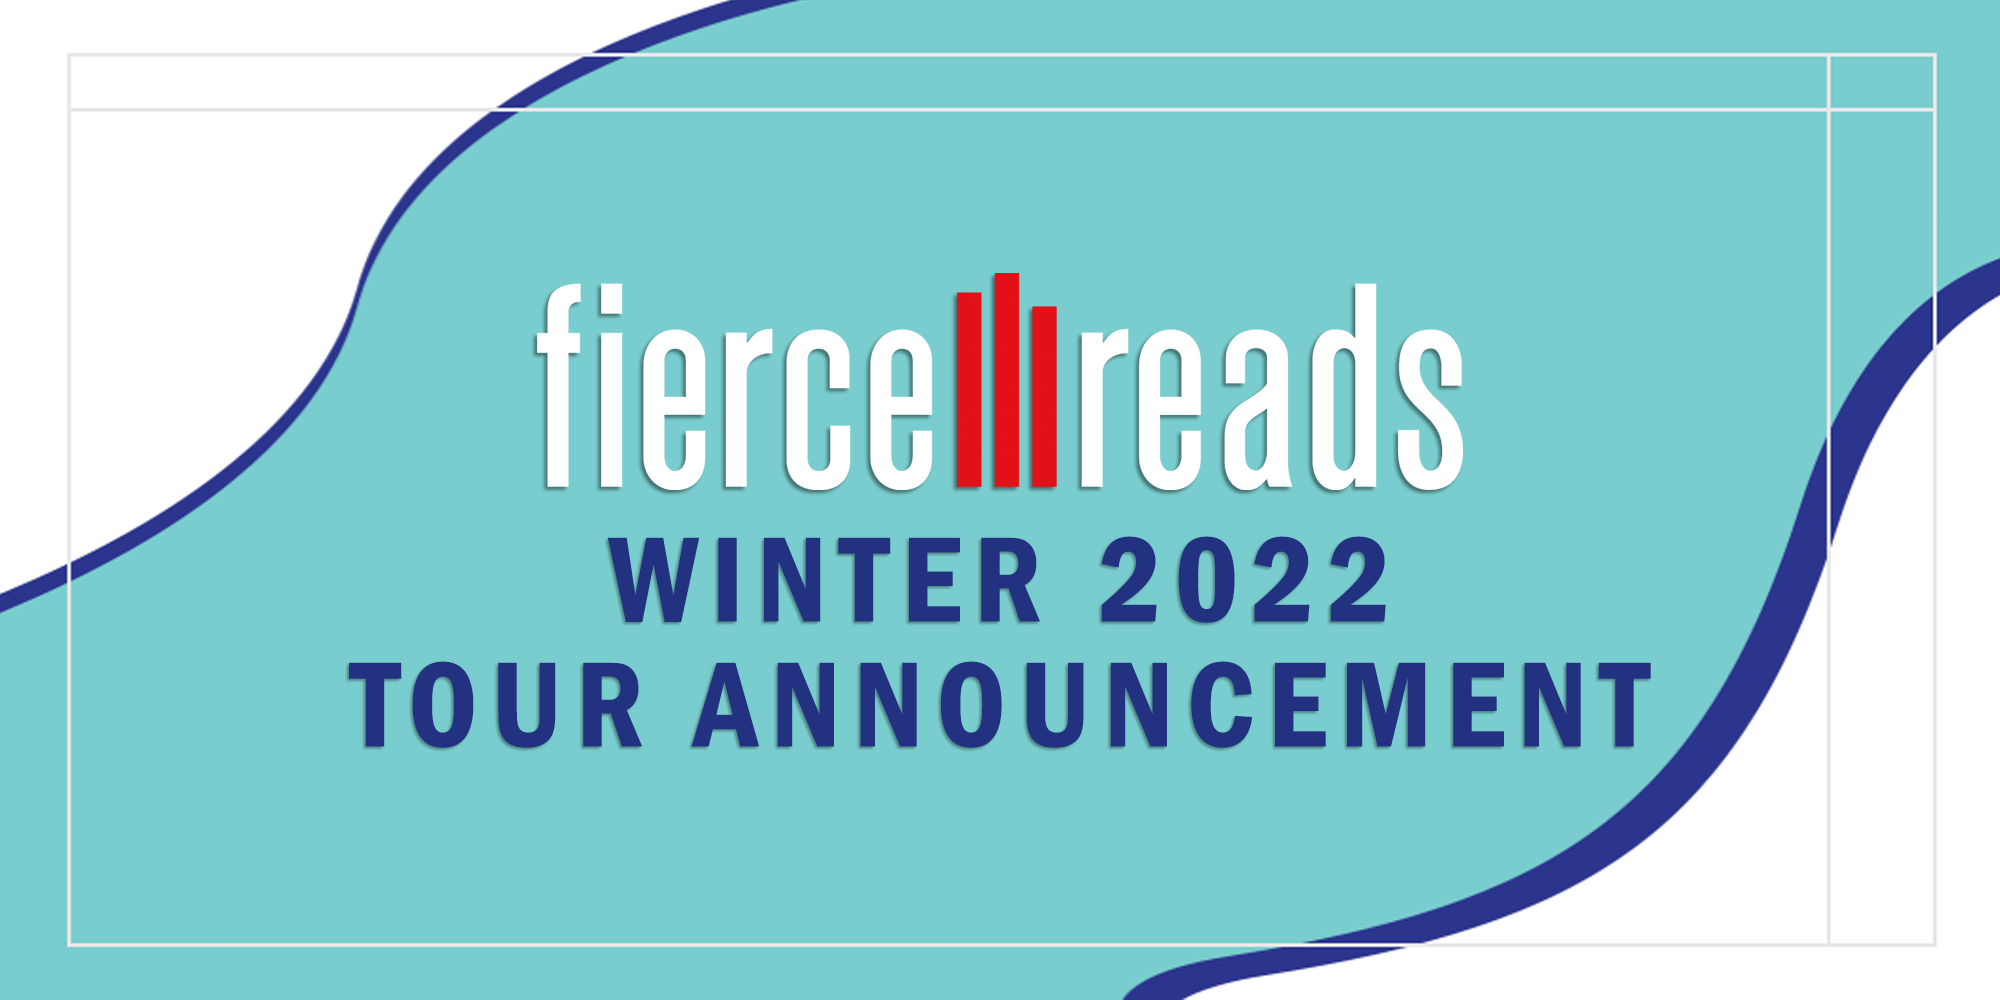 Announcing the Winter 2022 Fierce Reads Tour